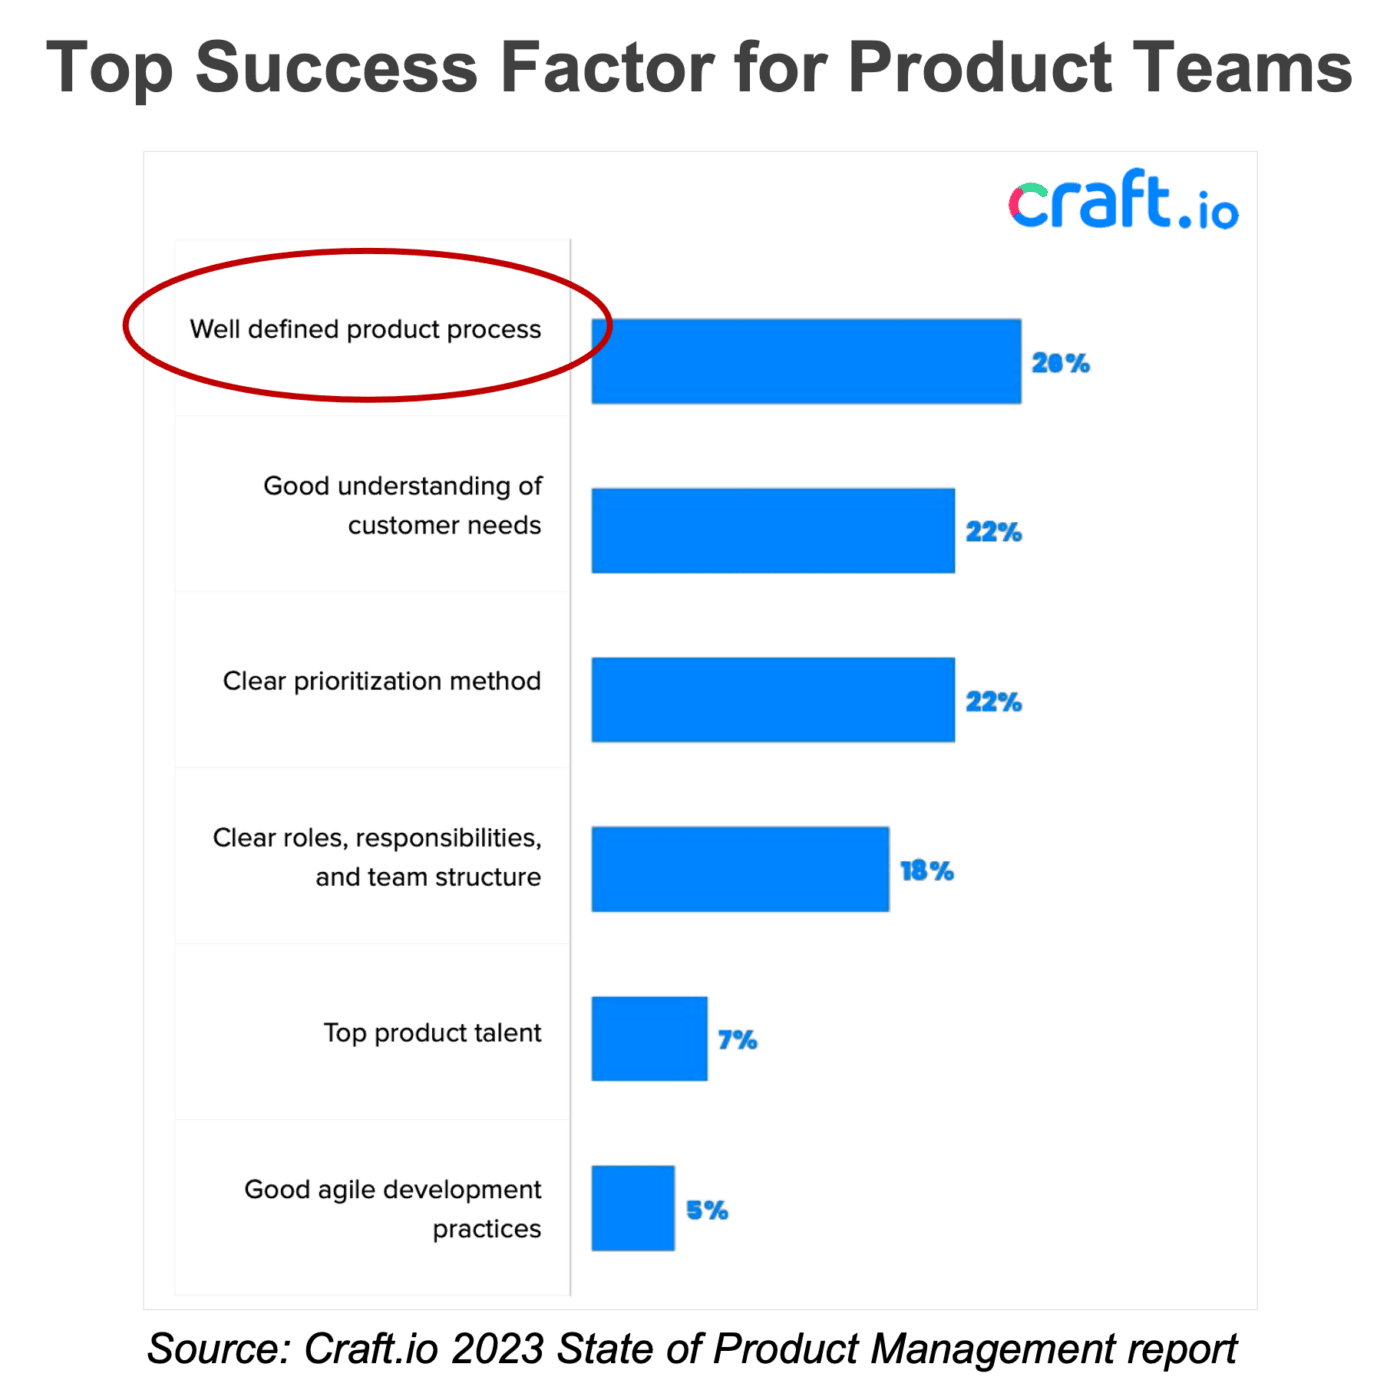 Top success factors for product teams